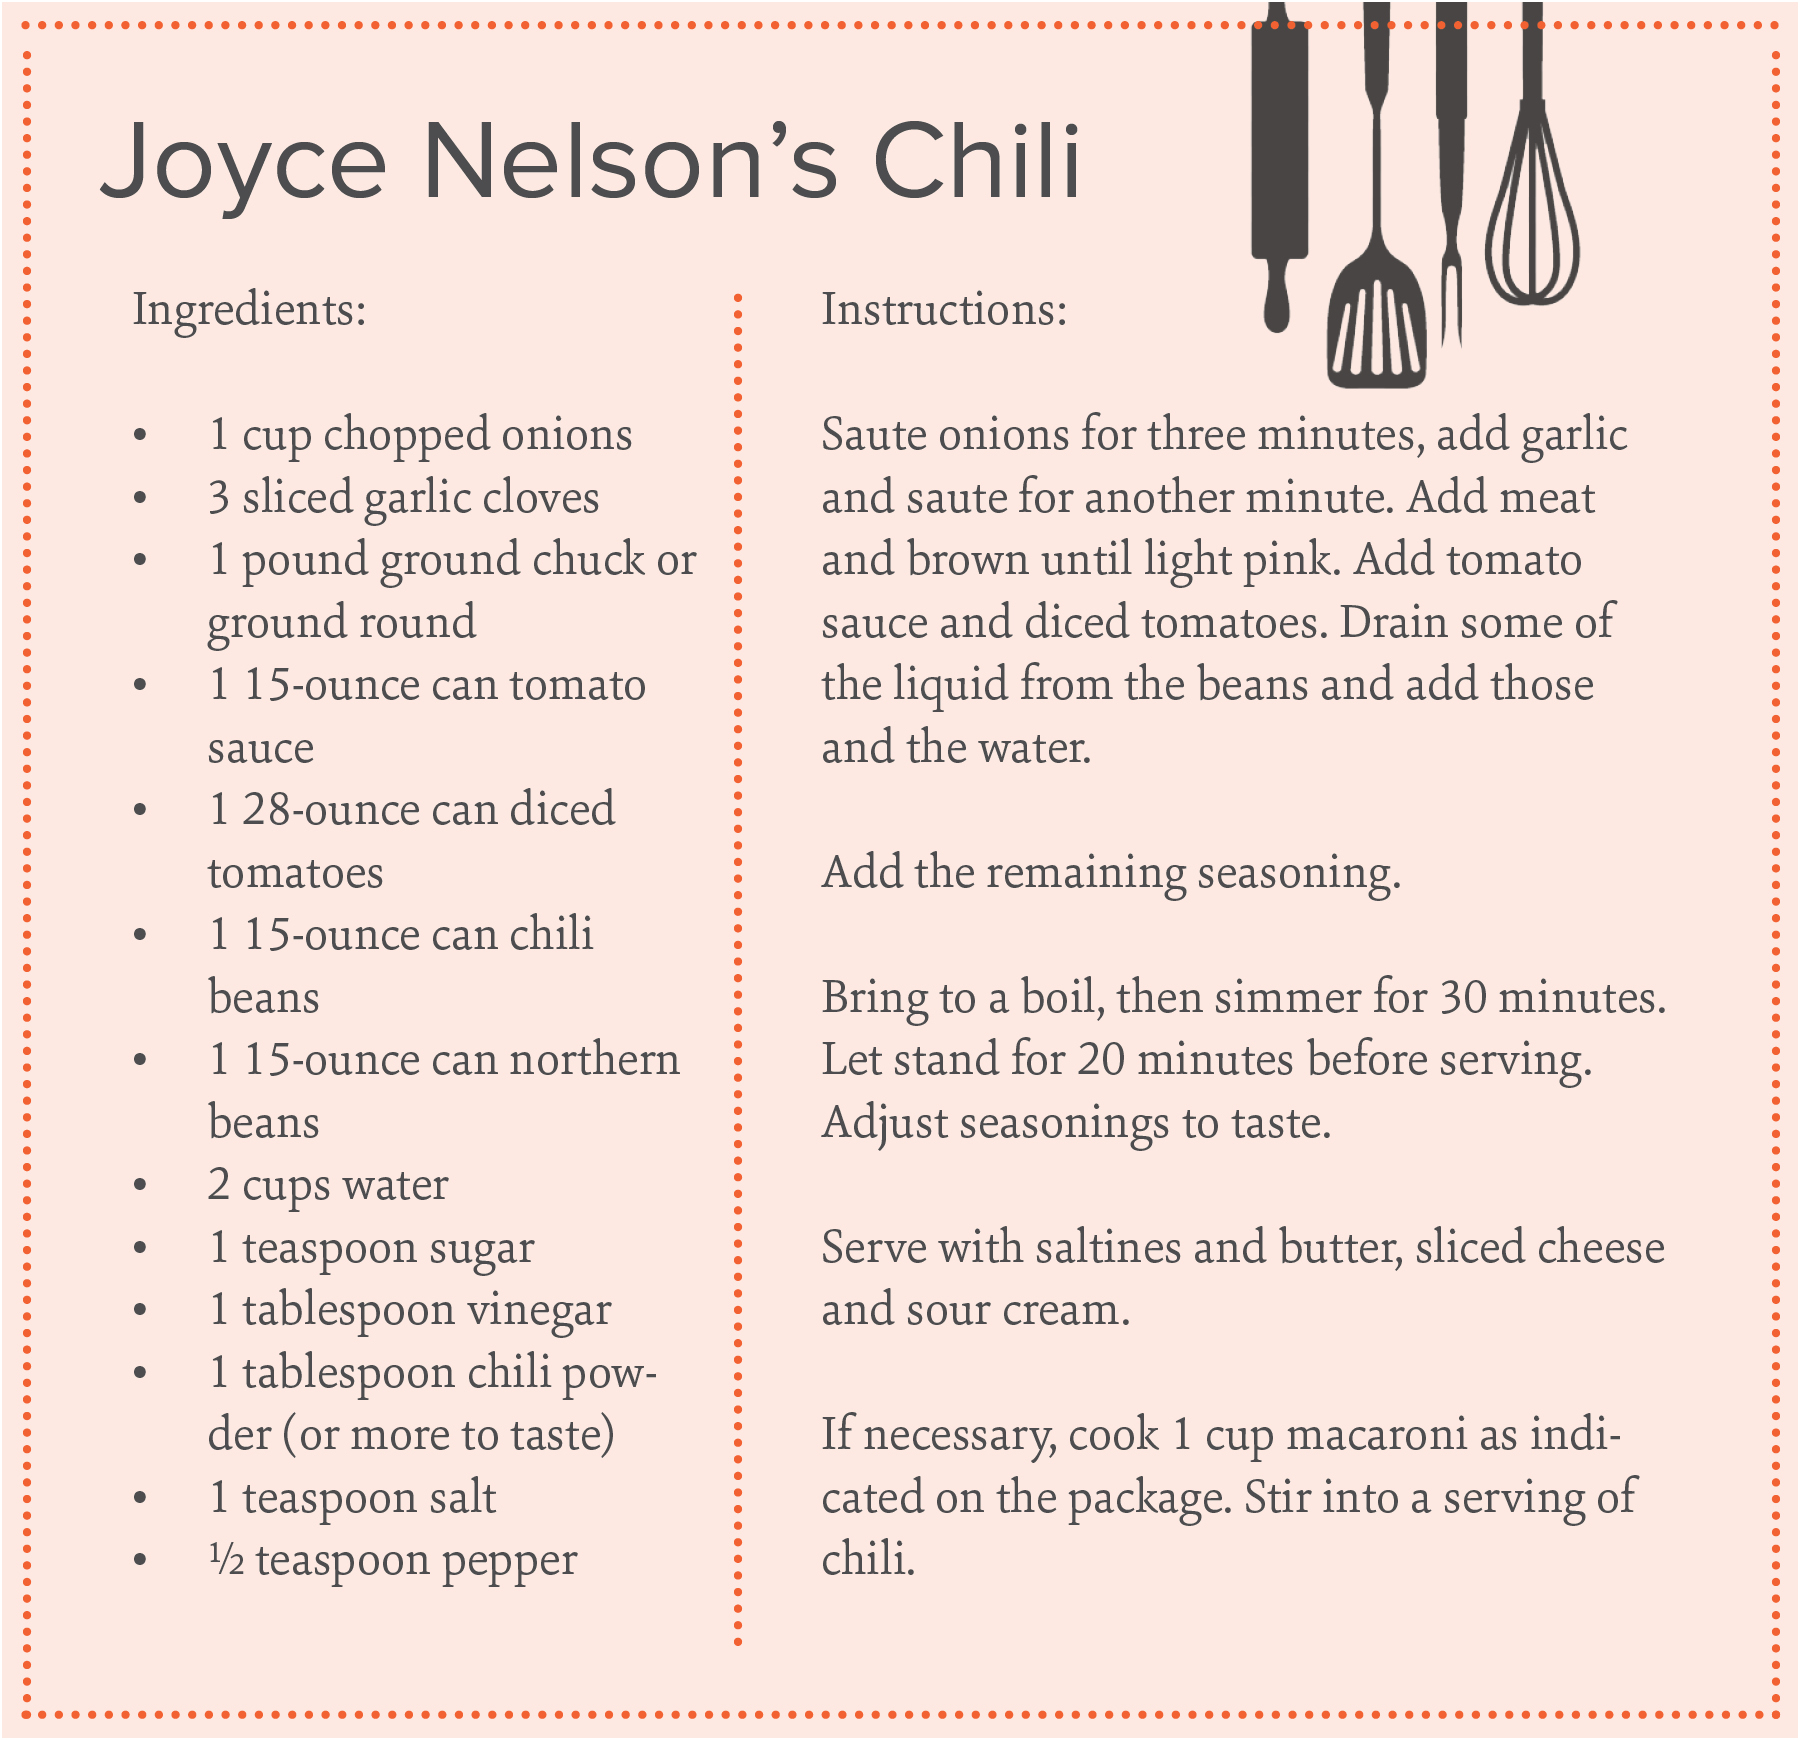 Joyce Nelson's chili recipe